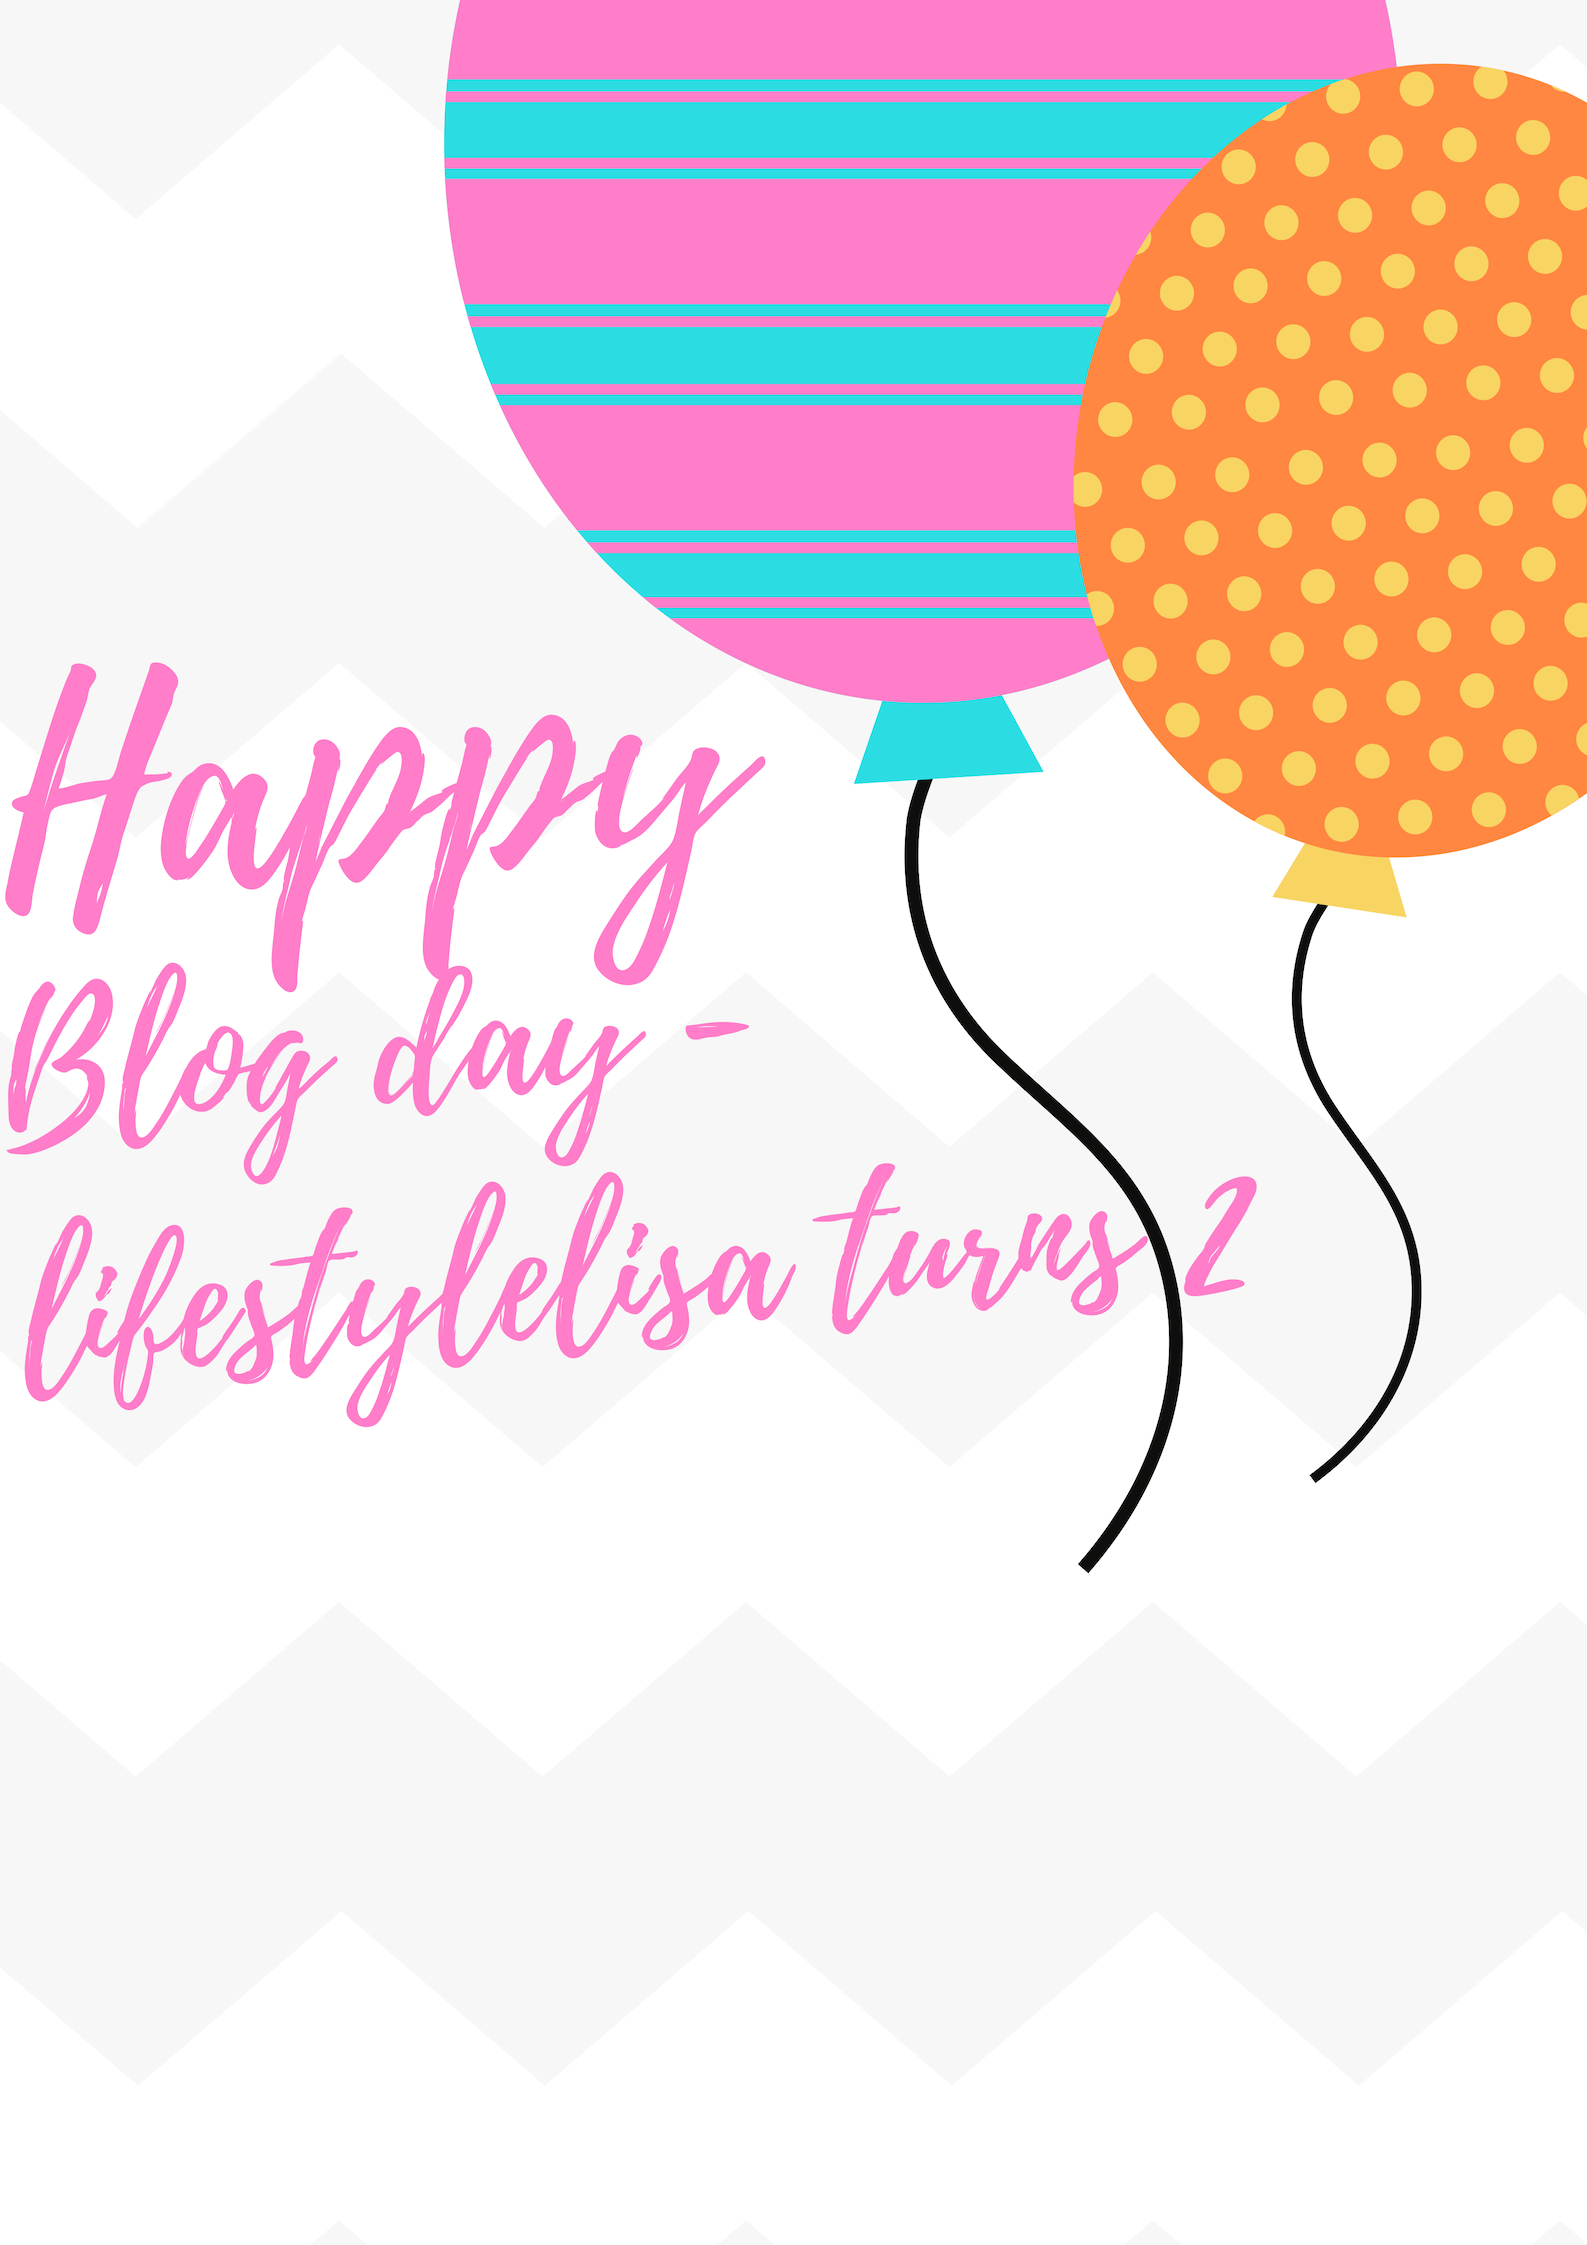 Happy Blog Day – Lifestylelisa turns 2